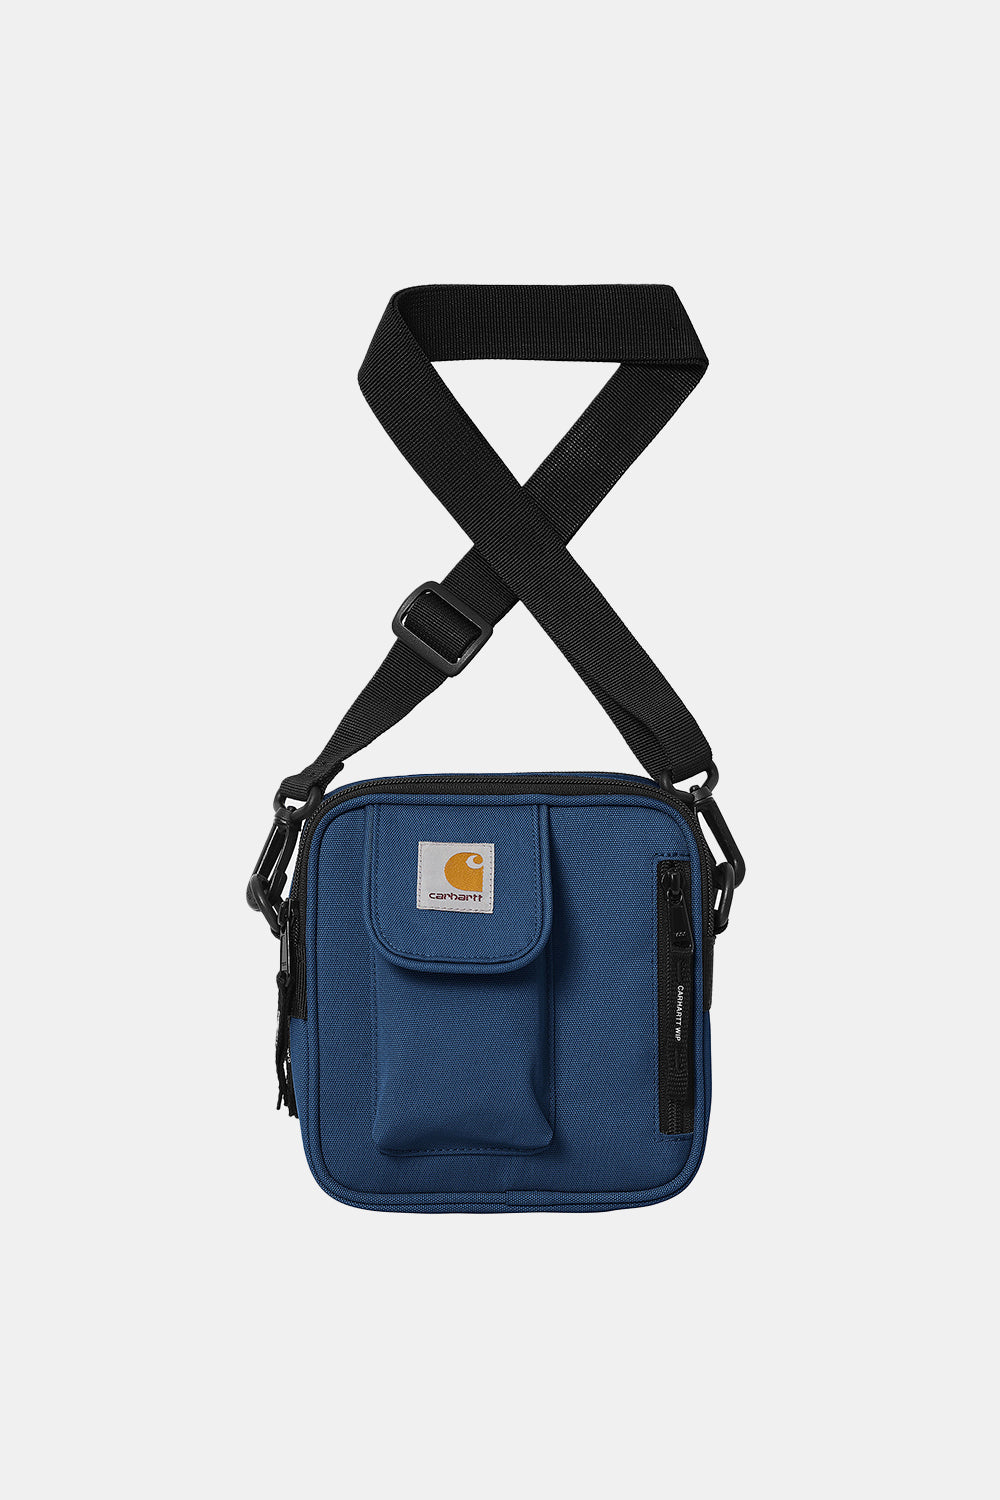 Carhartt WIP Small Essentials Recycled Side Bag (Elder Blue)